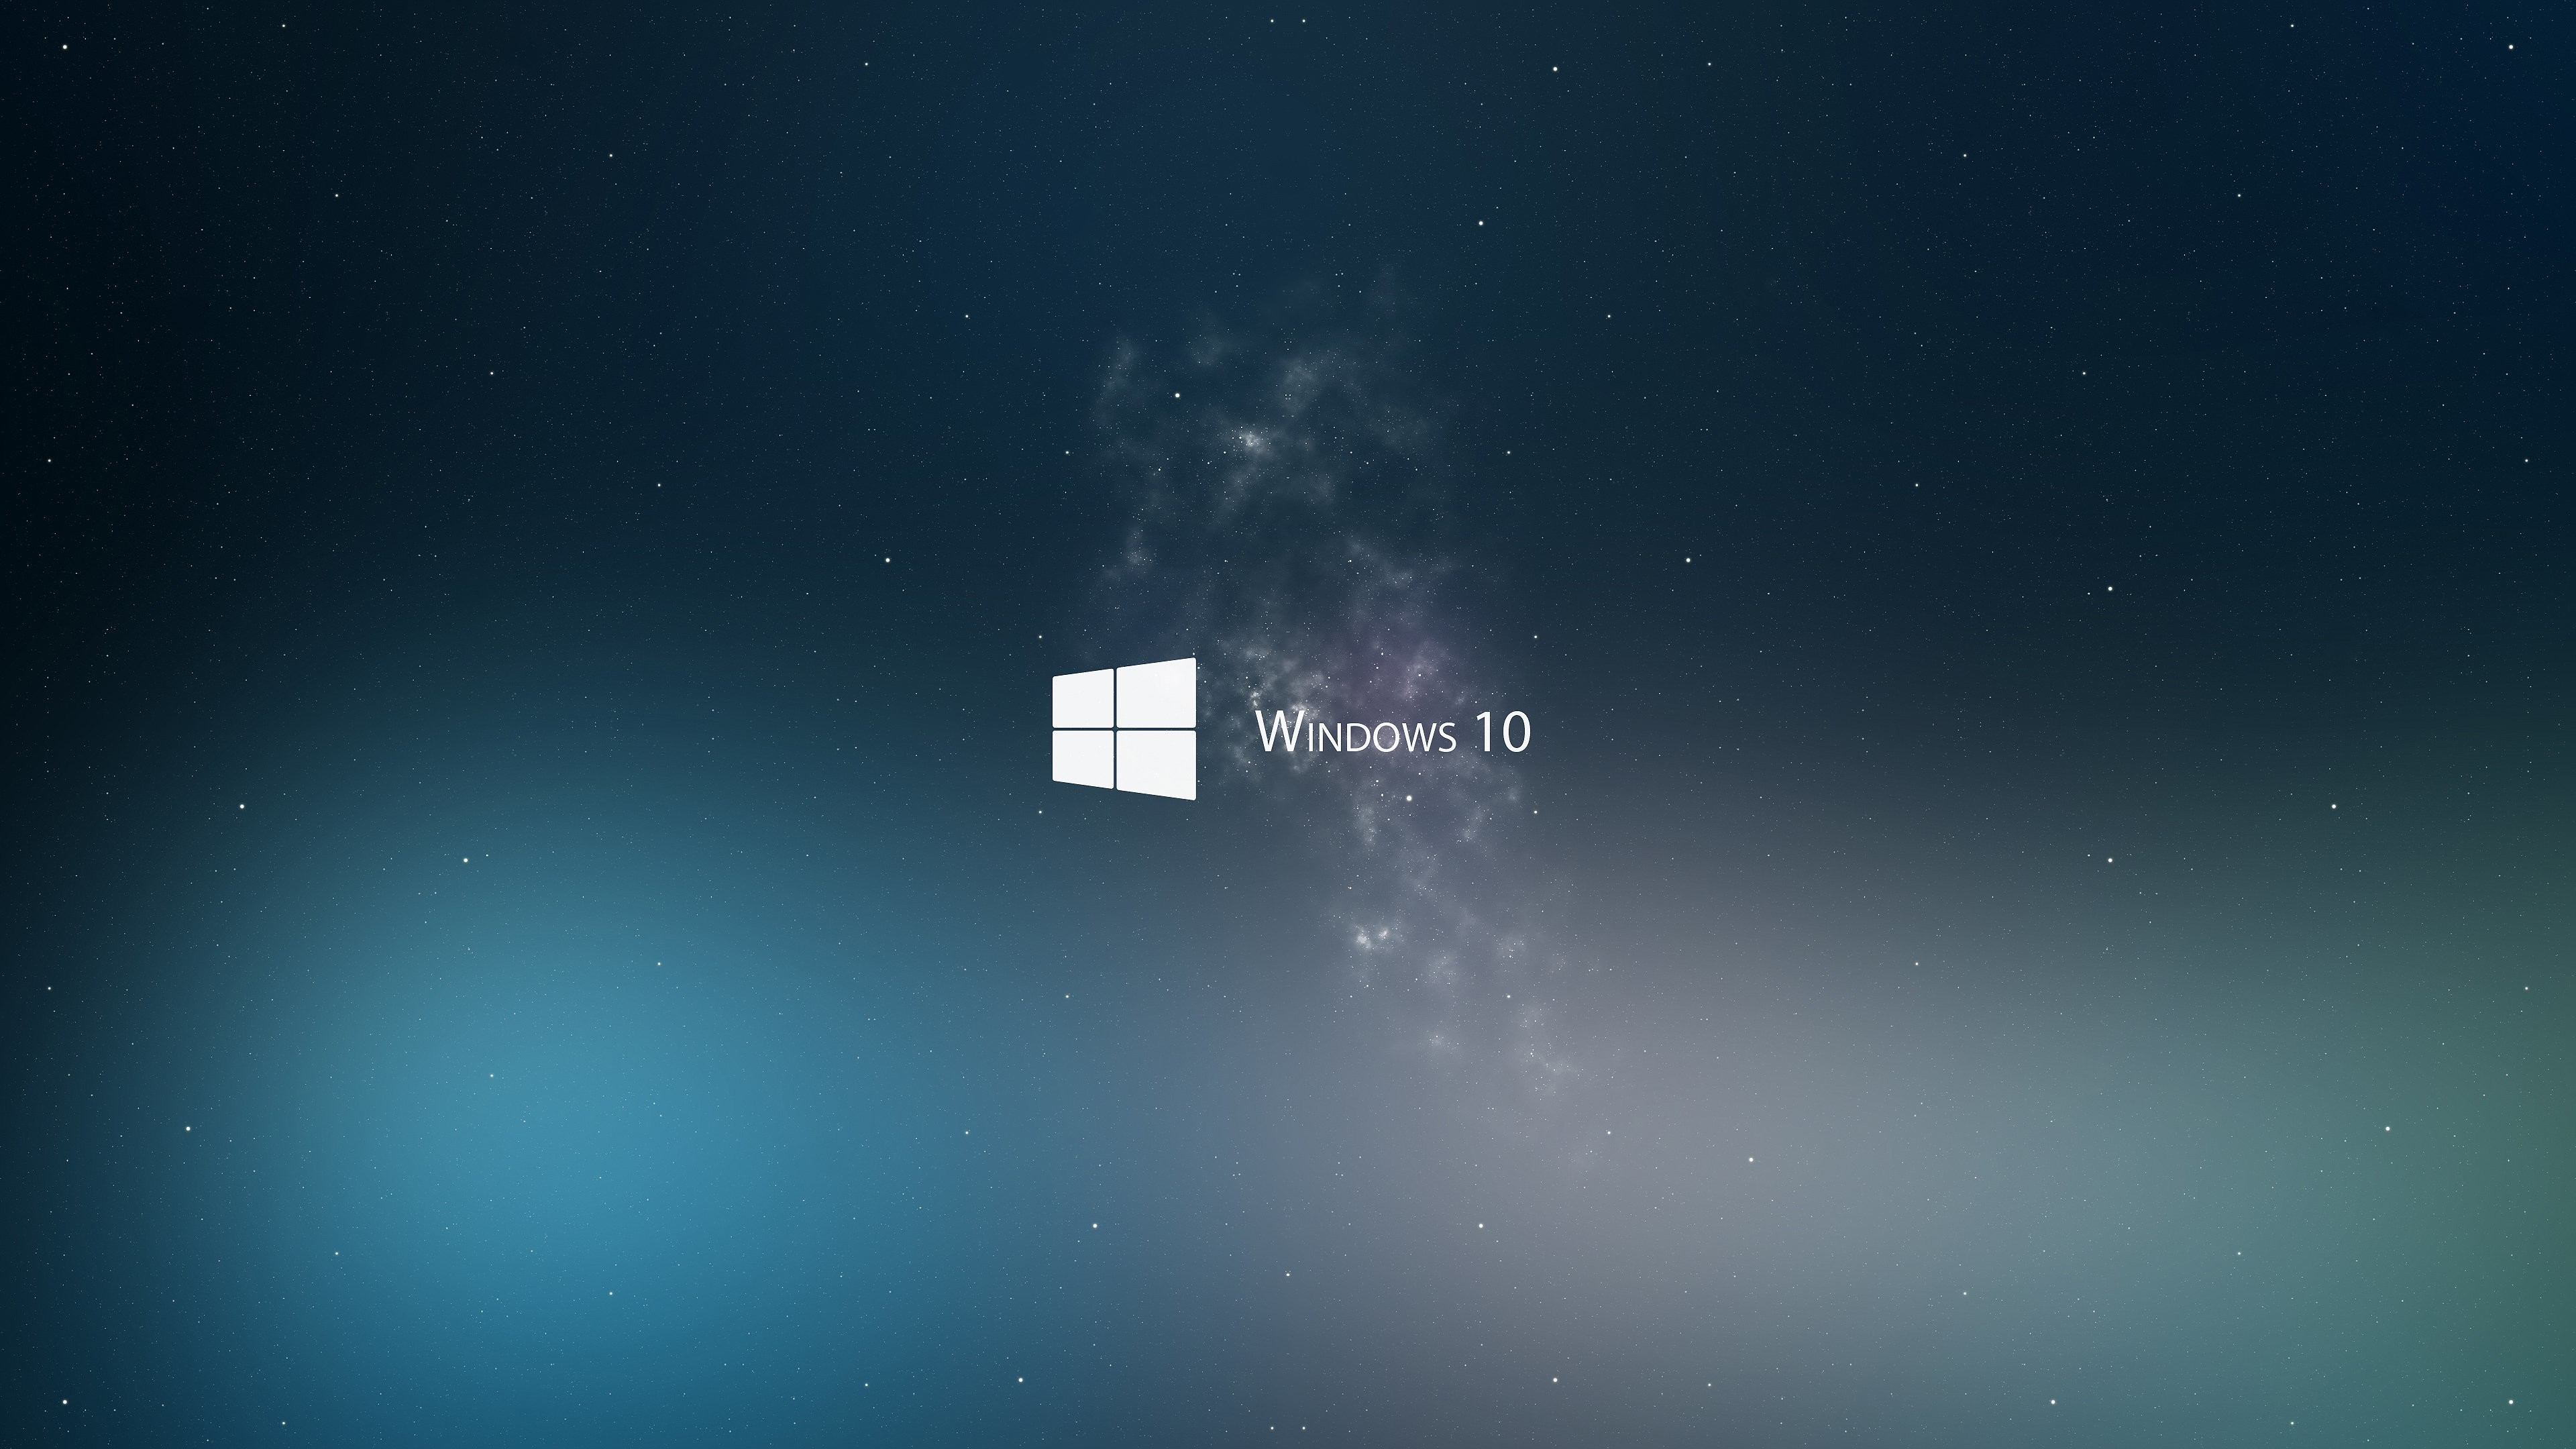 Creative Windows 10 Pics in Full HD